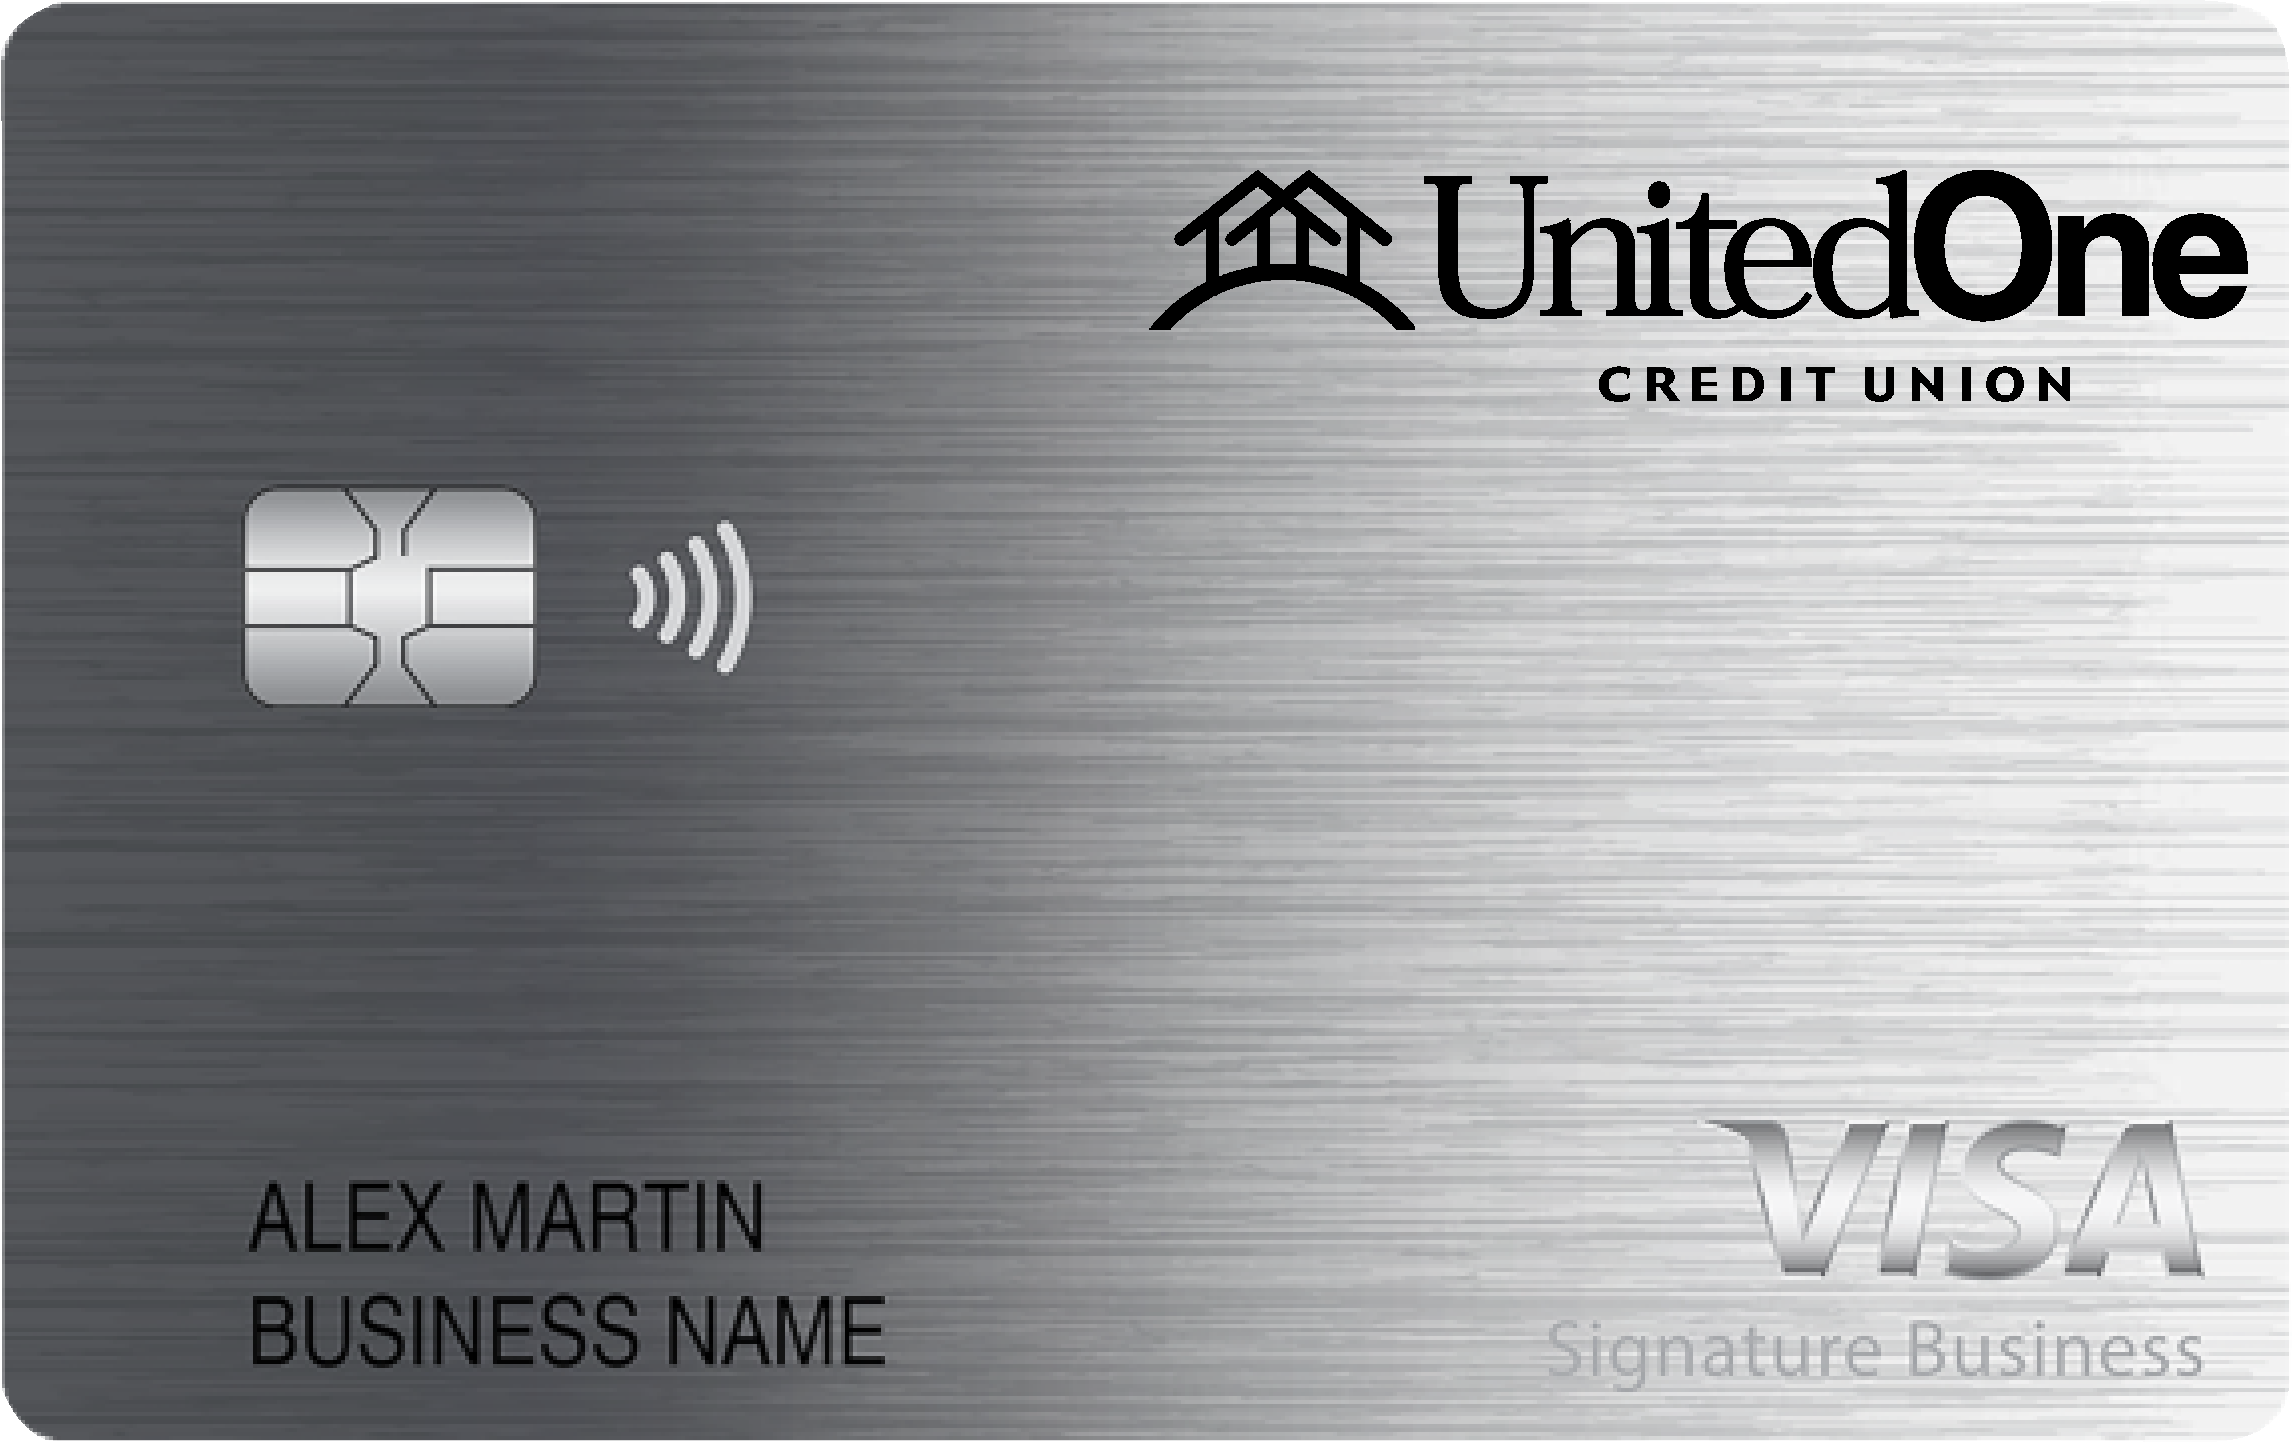 UnitedOne Credit Union Smart Business Rewards Card